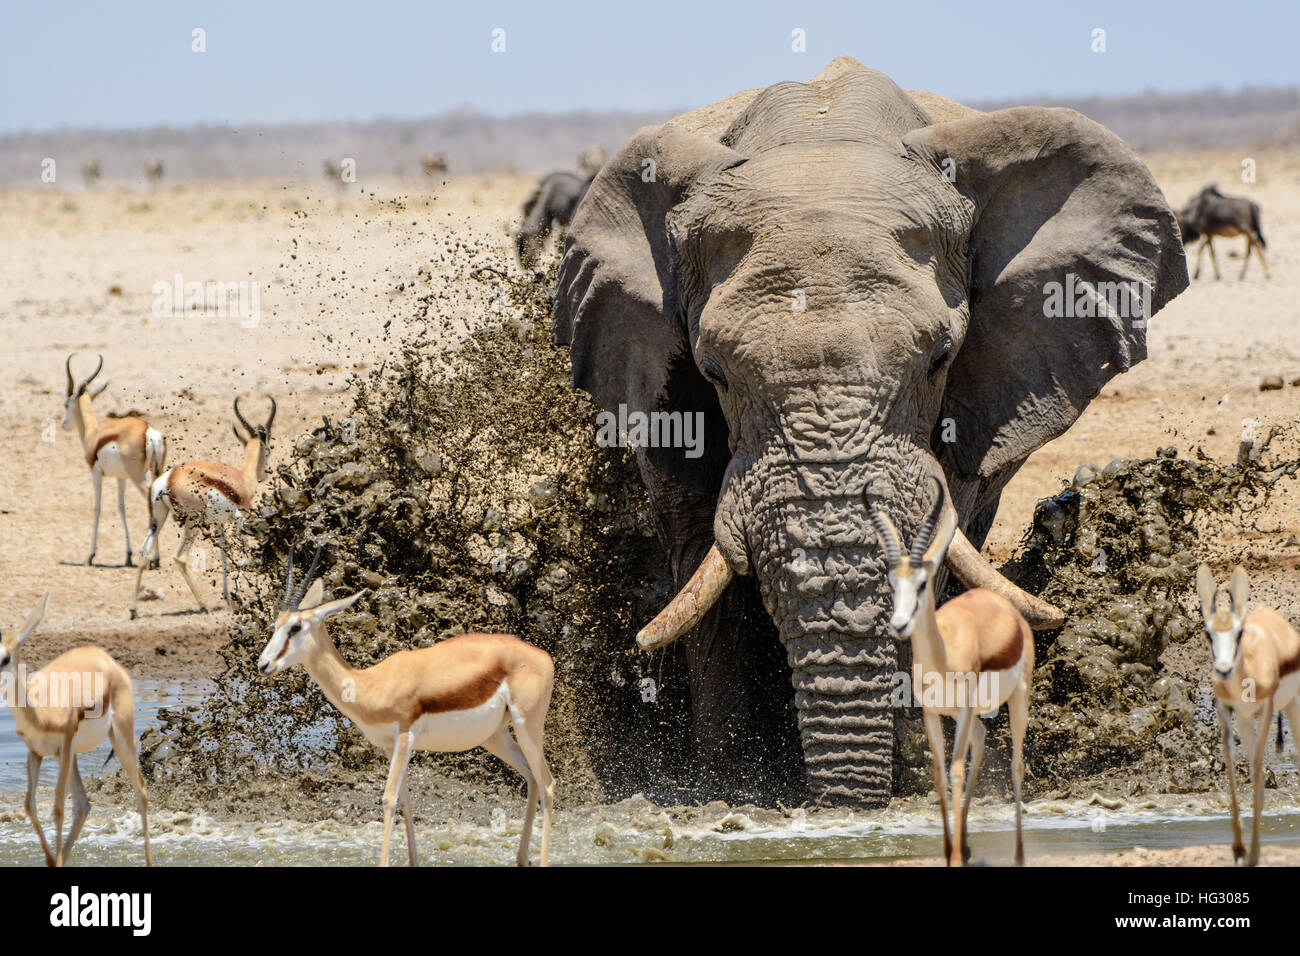 Large Bull elephant splashing water at the waterhole Stock Photo